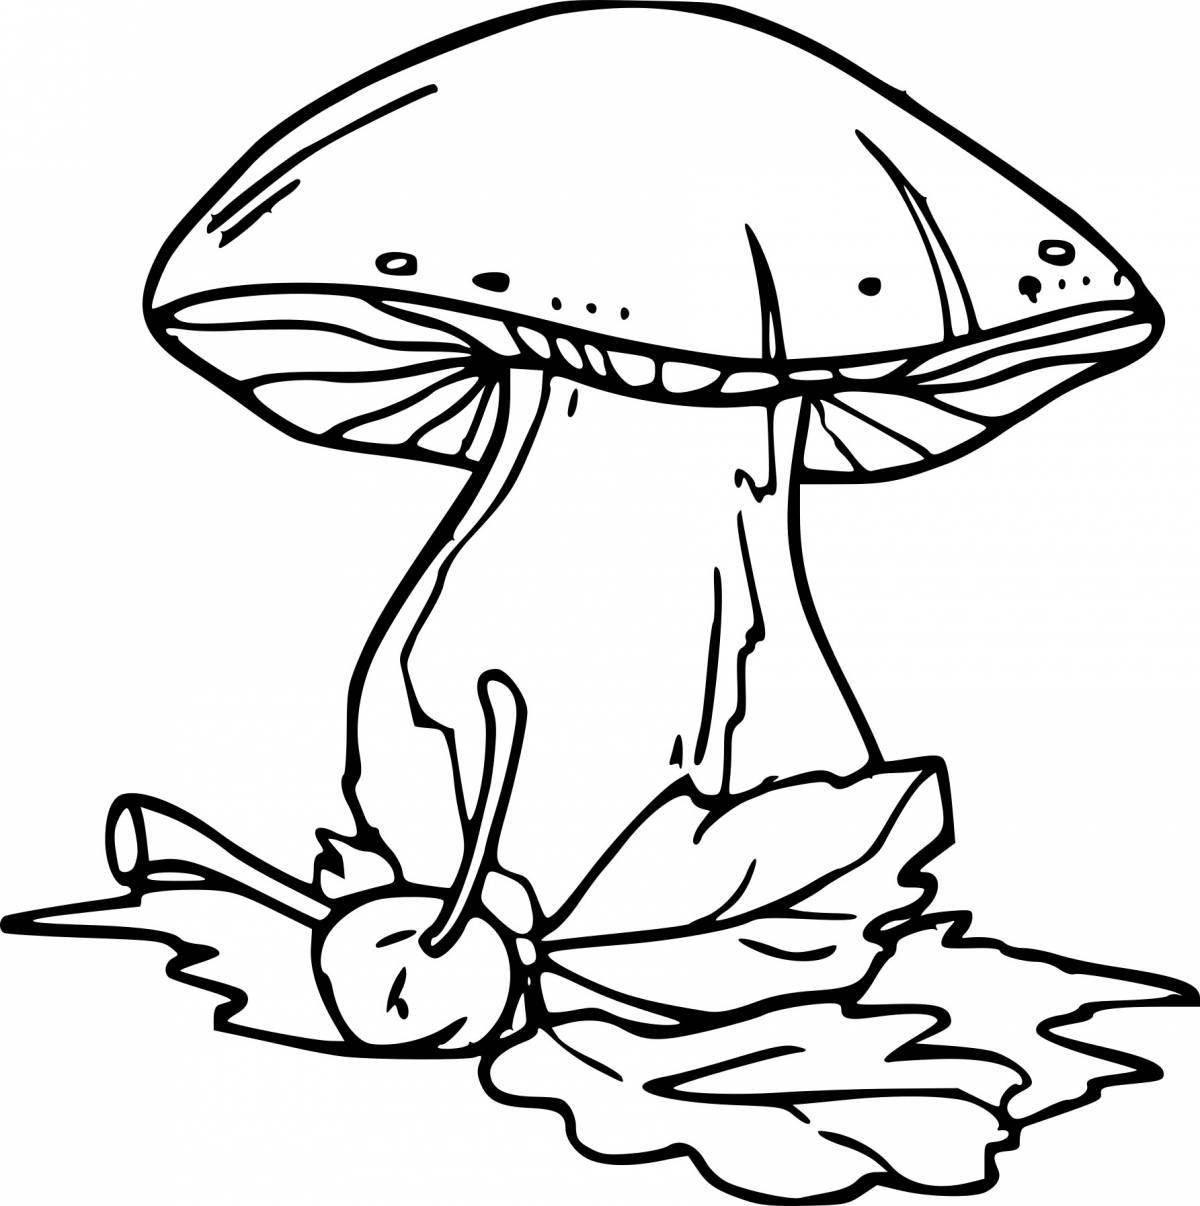 Boletus mushroom #2